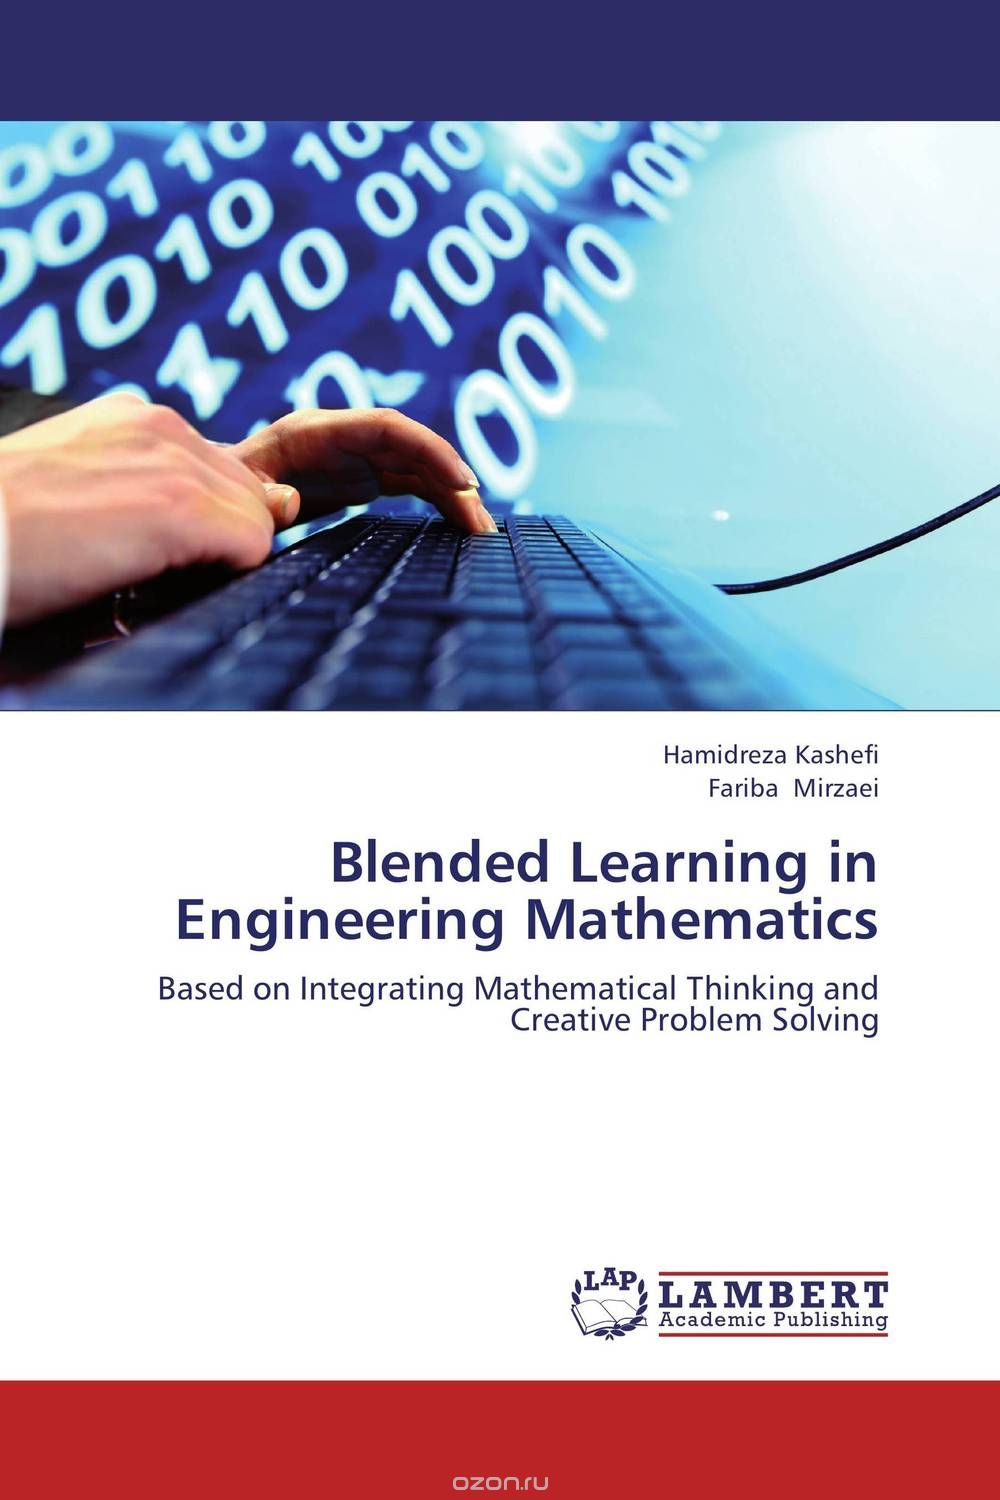 Скачать книгу "Blended Learning in Engineering Mathematics"